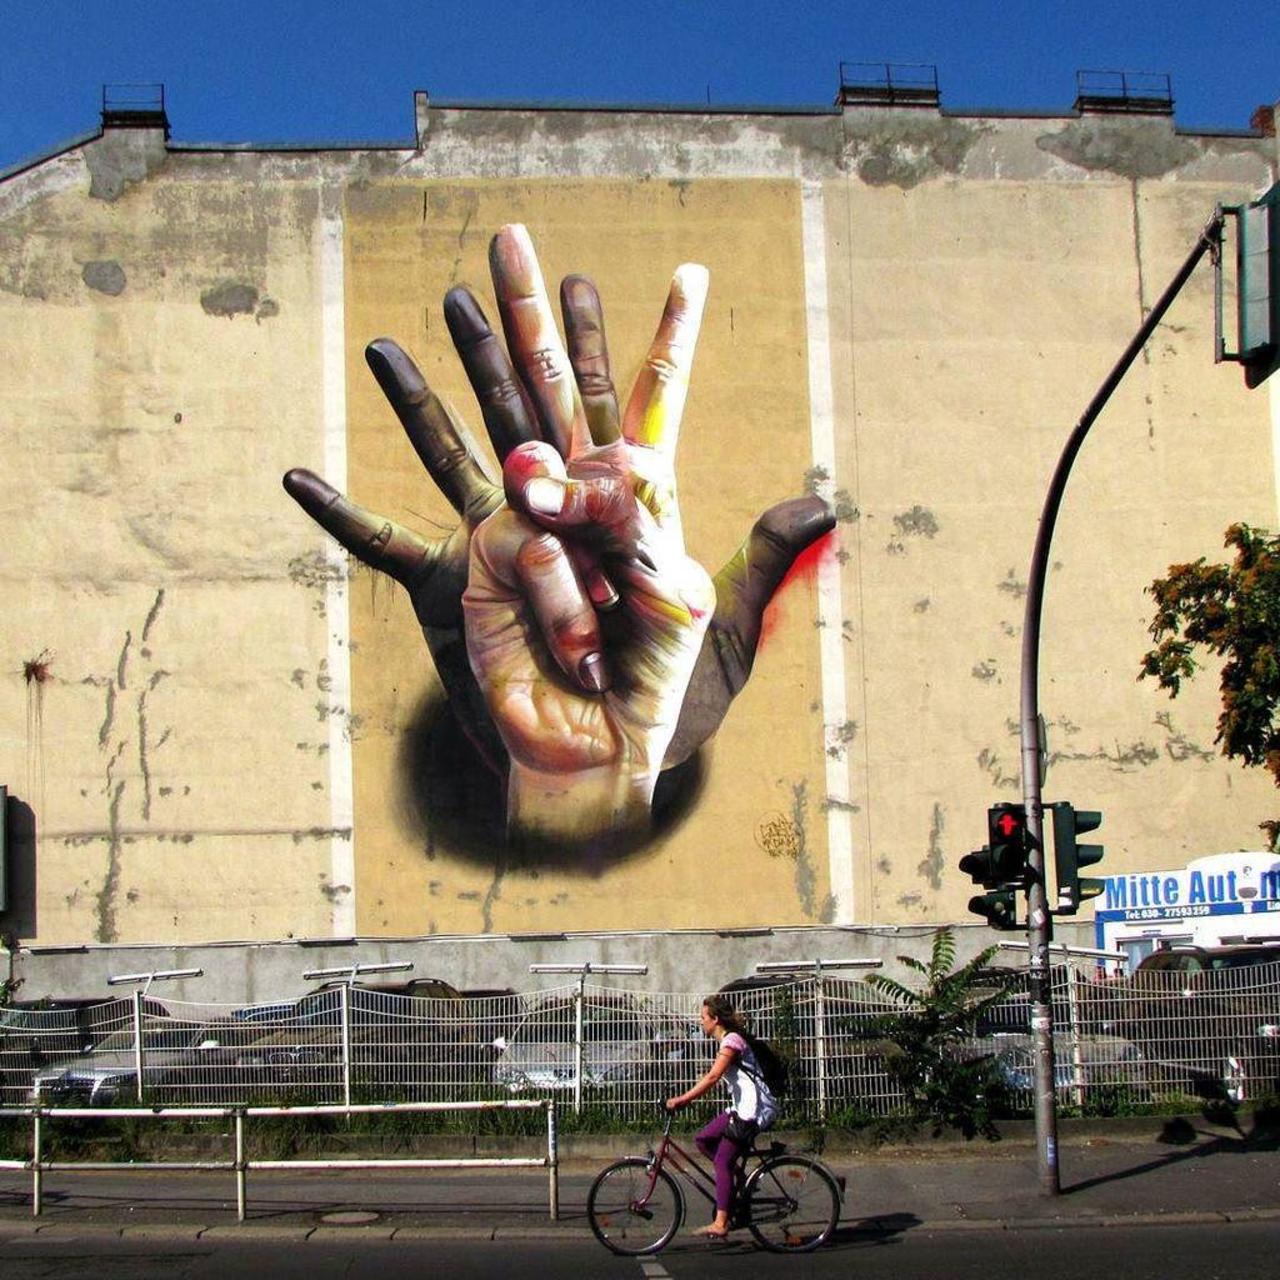 RT @StArtEverywhere: By @case_maclaim in Berlin. 
#streetart #graffiti #dsb_graff #tv_streetart #berlin #streetartberlin #berlinstreetar… http://t.co/k2iWtf8vKR